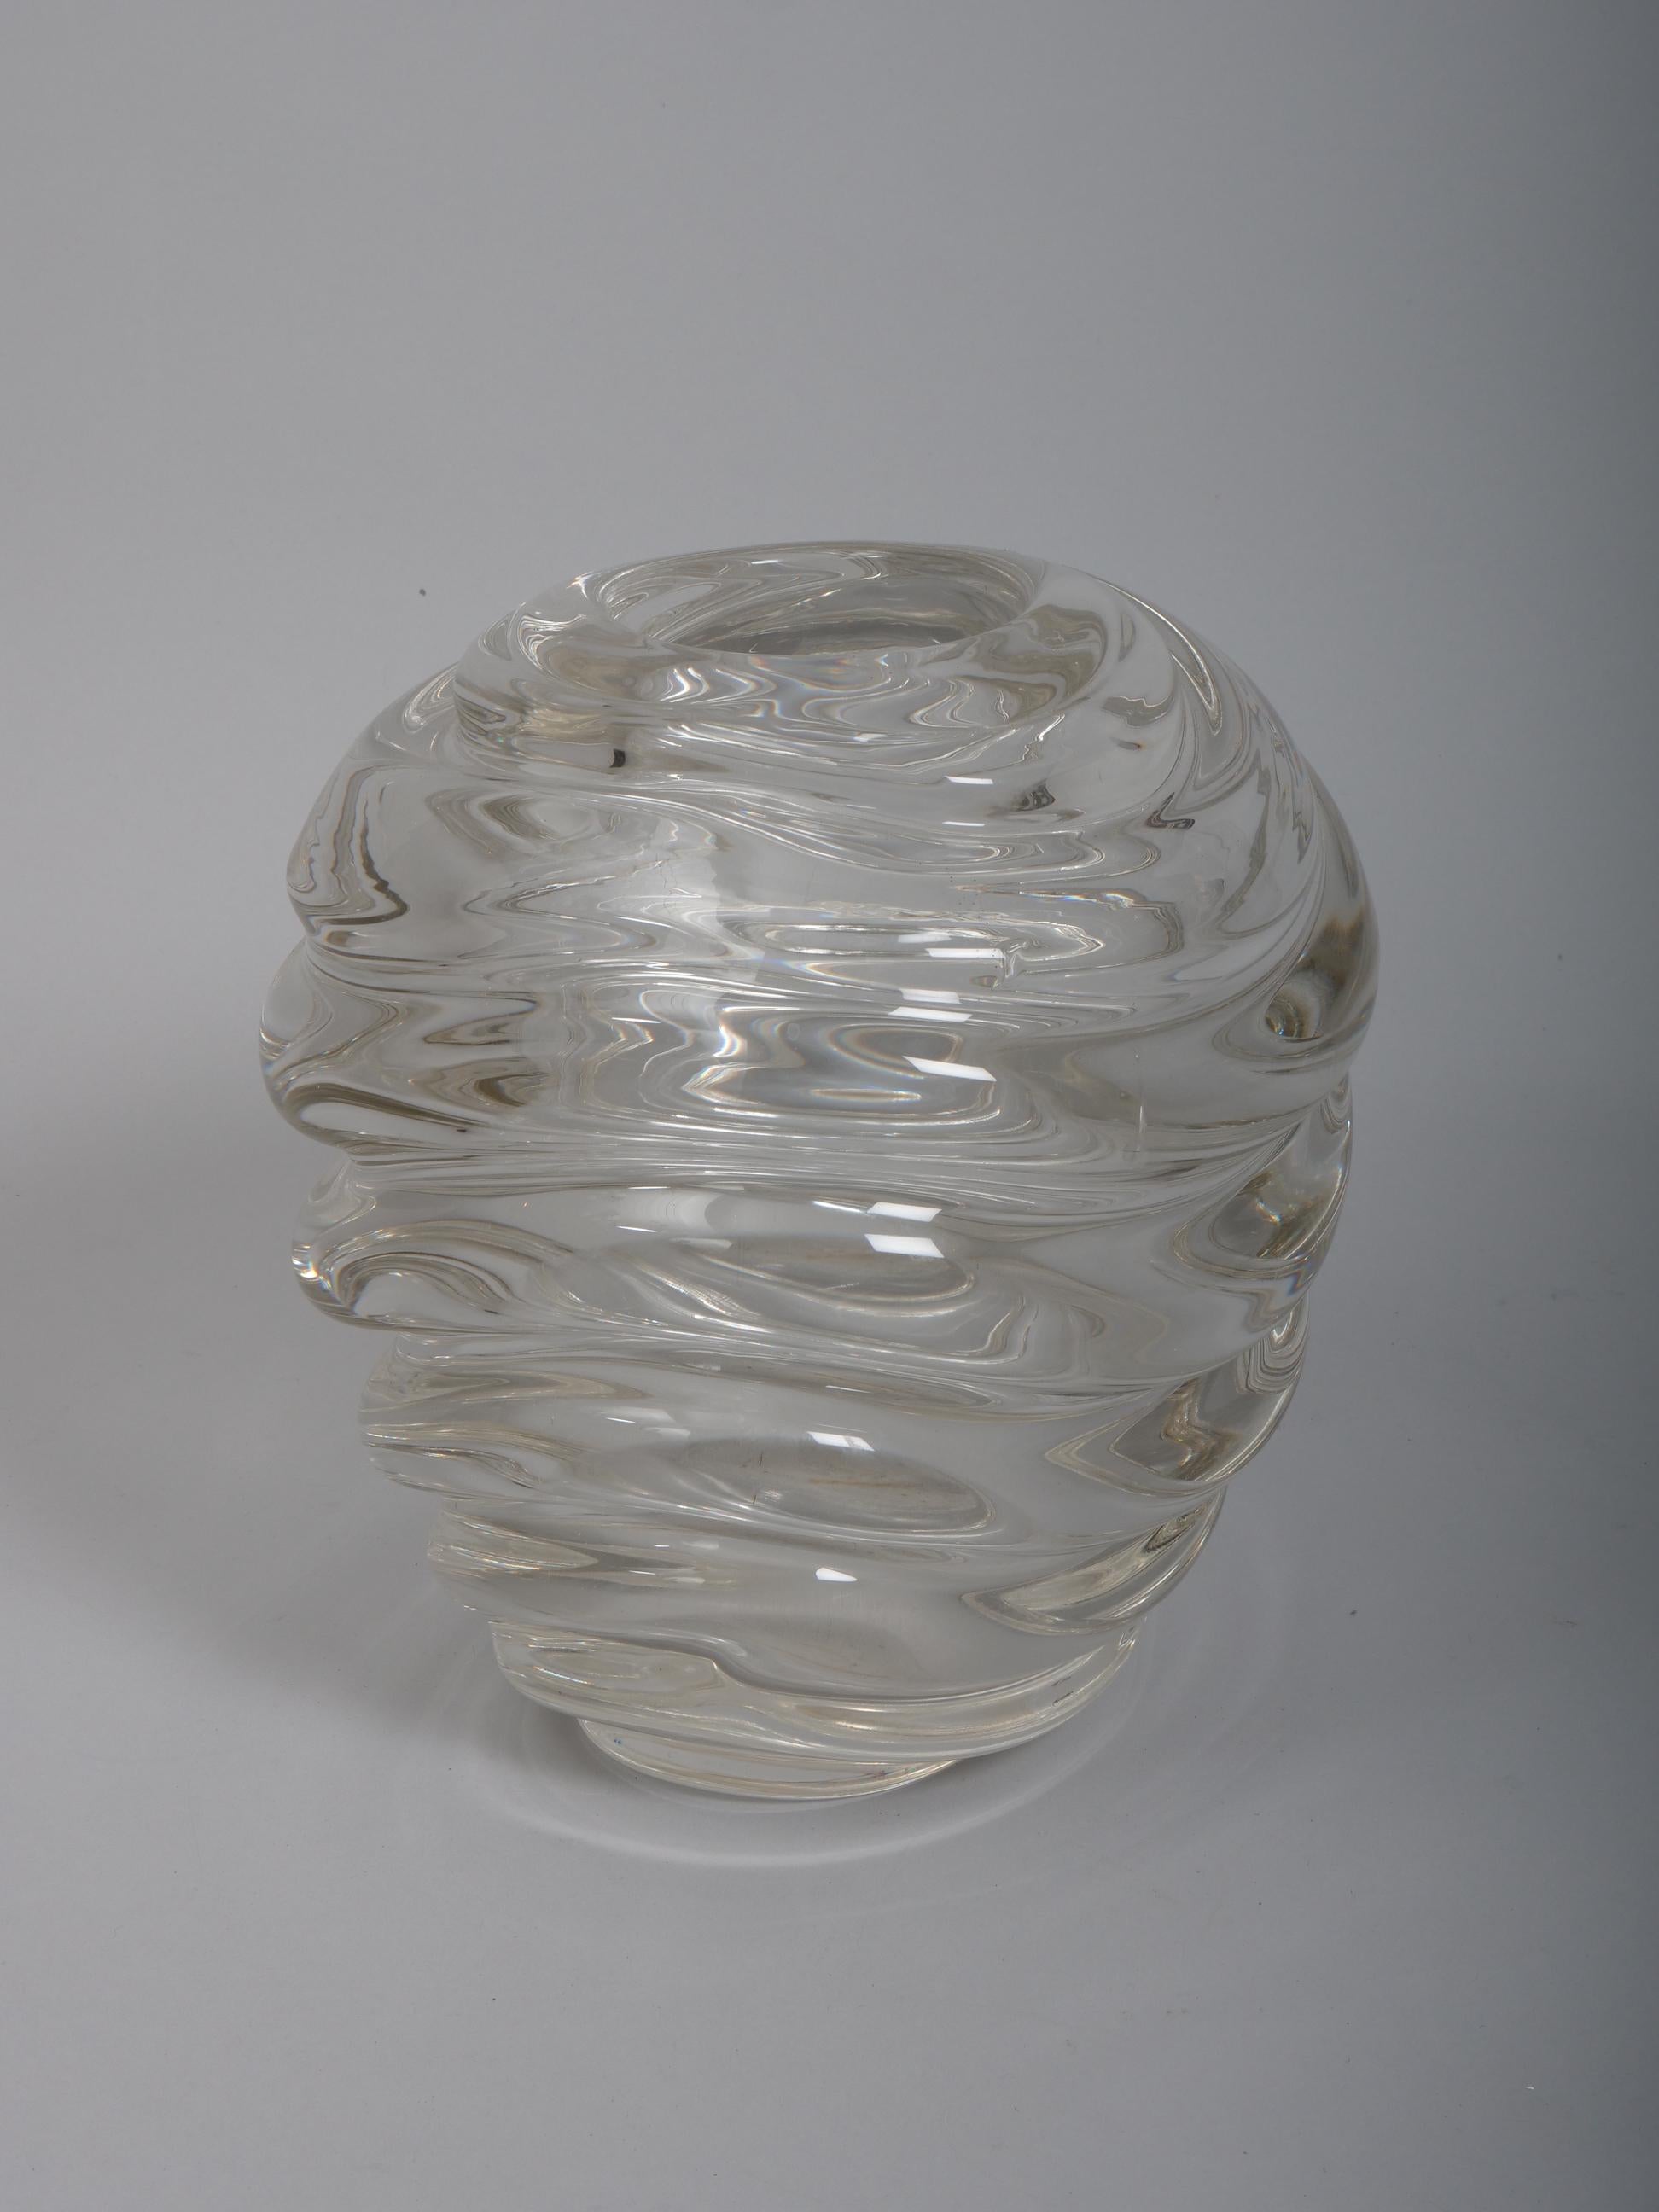 Impressive and very heavy Murano, thick glass vase. 

